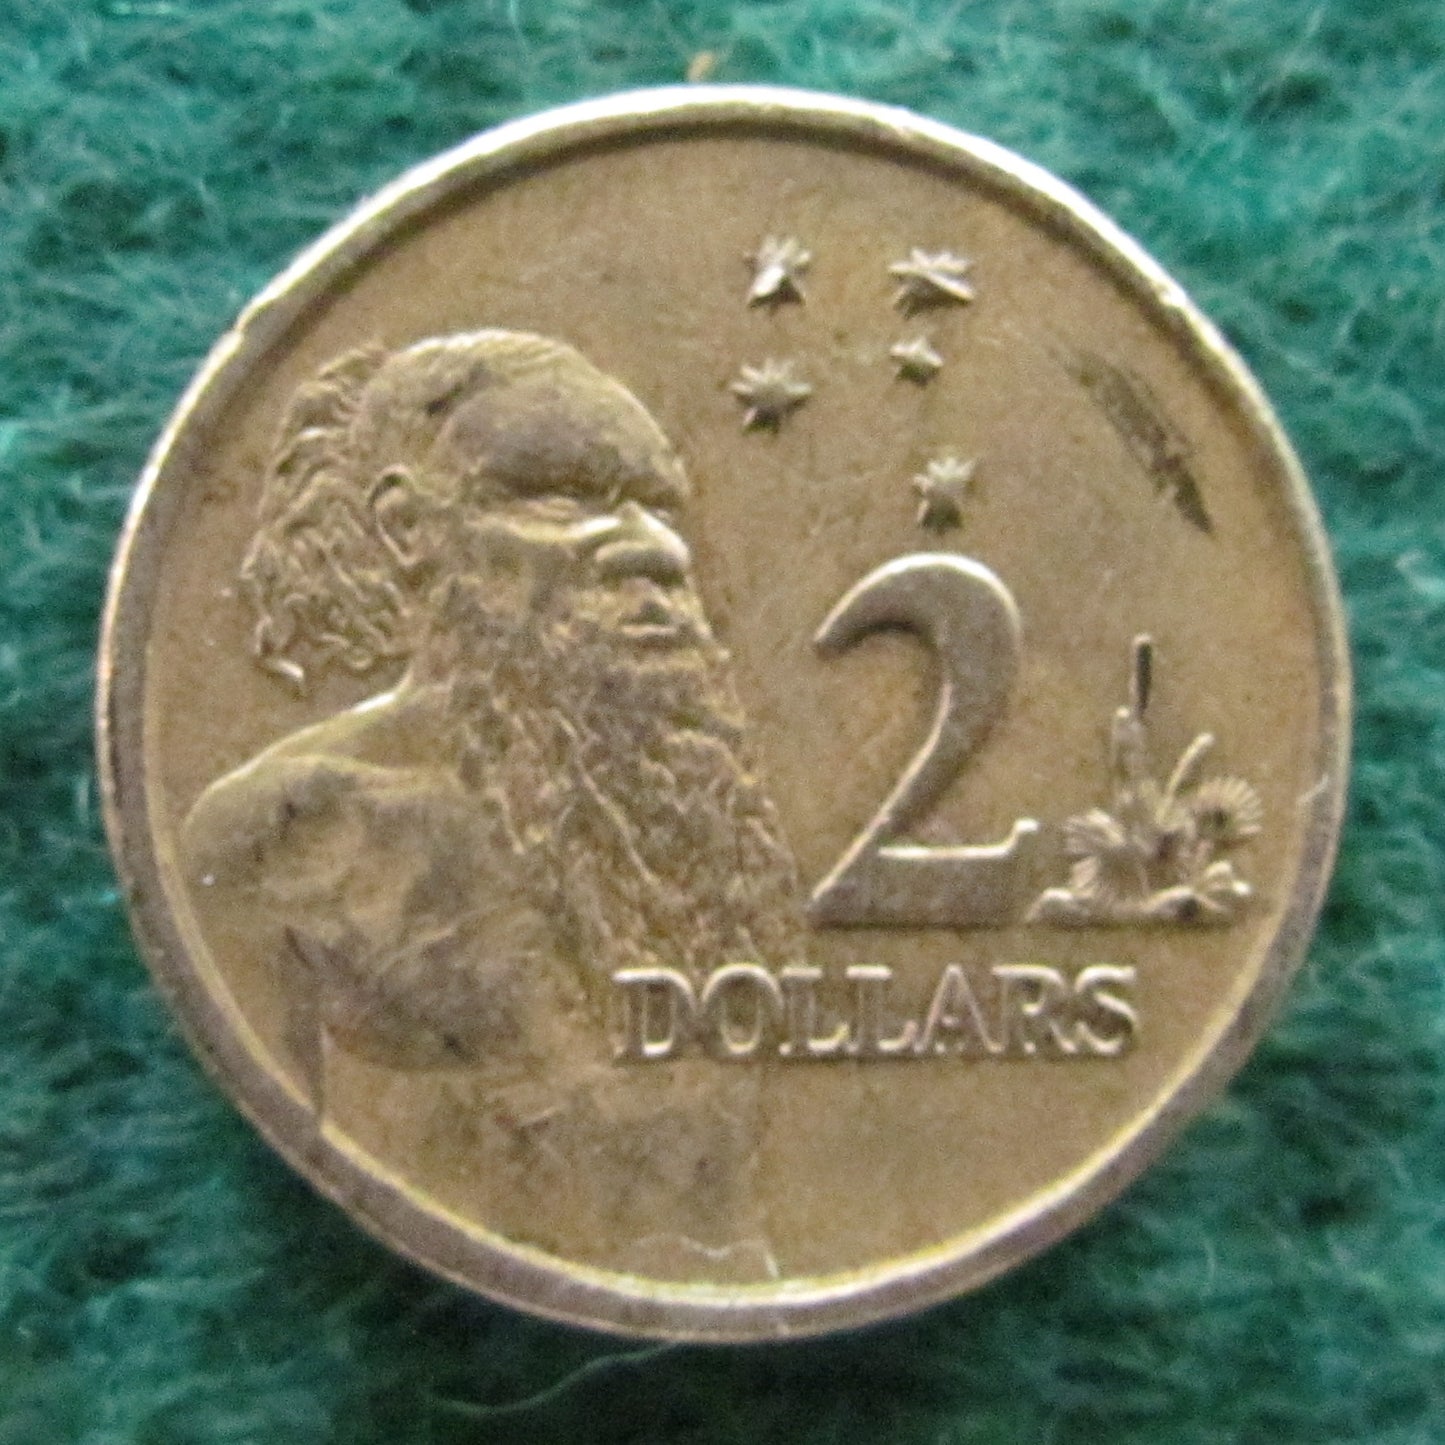 Australian 1998 2 Dollar Aboriginal Elder Queen Elizabeth Coin - Circulated